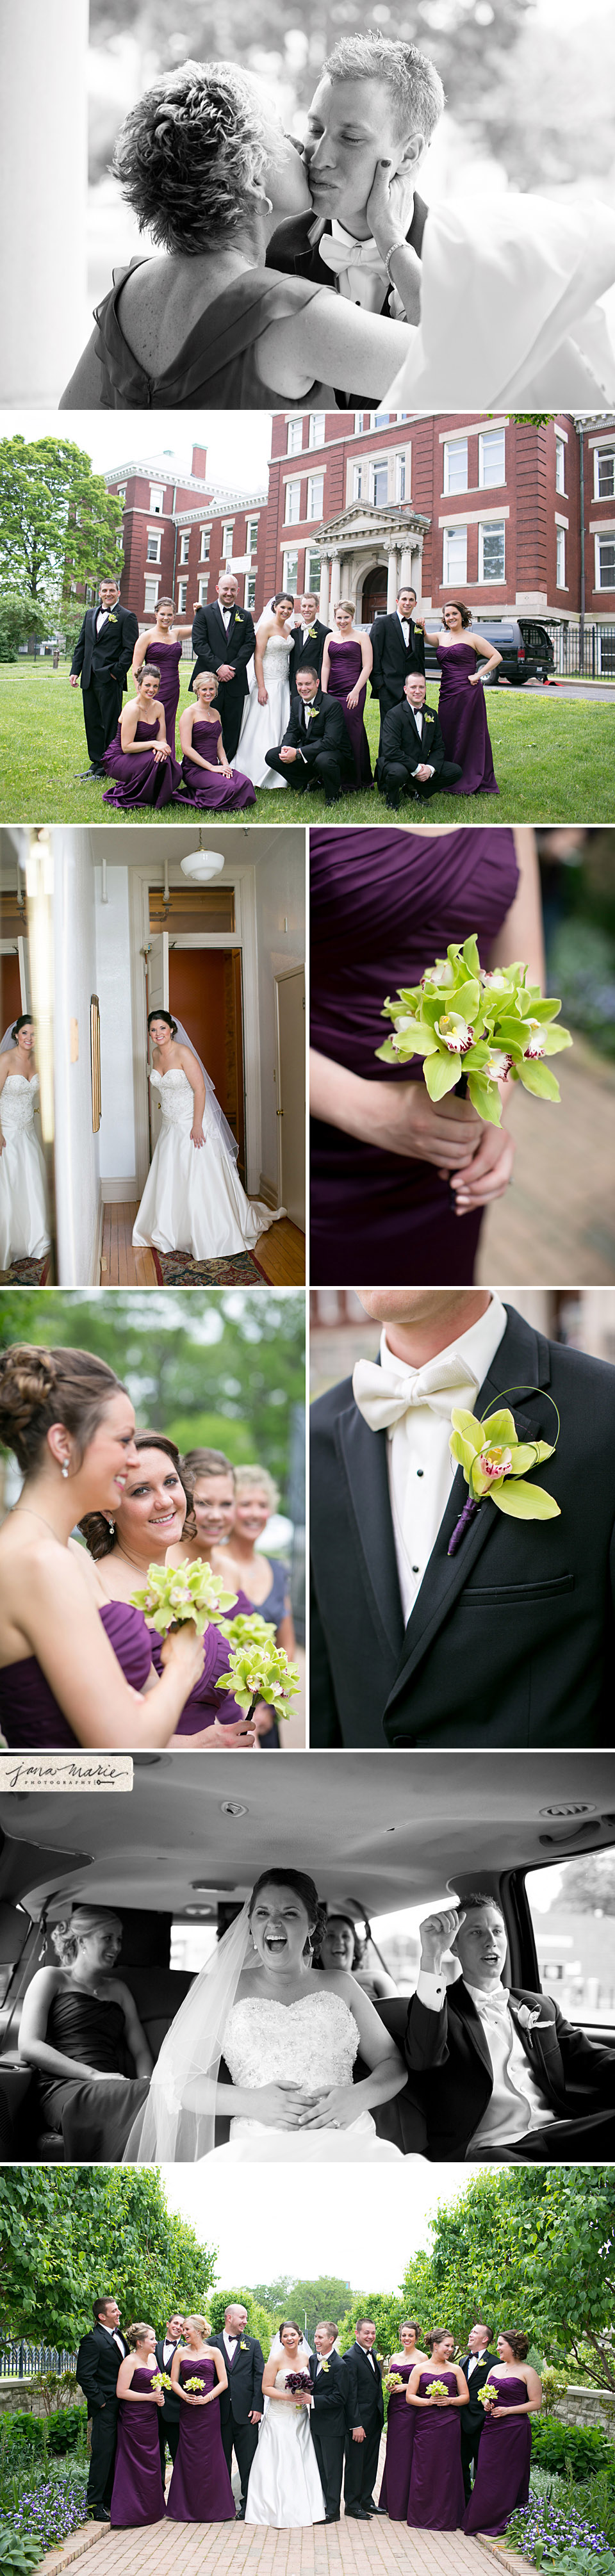 Bouquet, Boutonniere, bridal party pictures, Murial Kauffman Gardens, Bridal suite, Jana Marler, Kansas City photographer